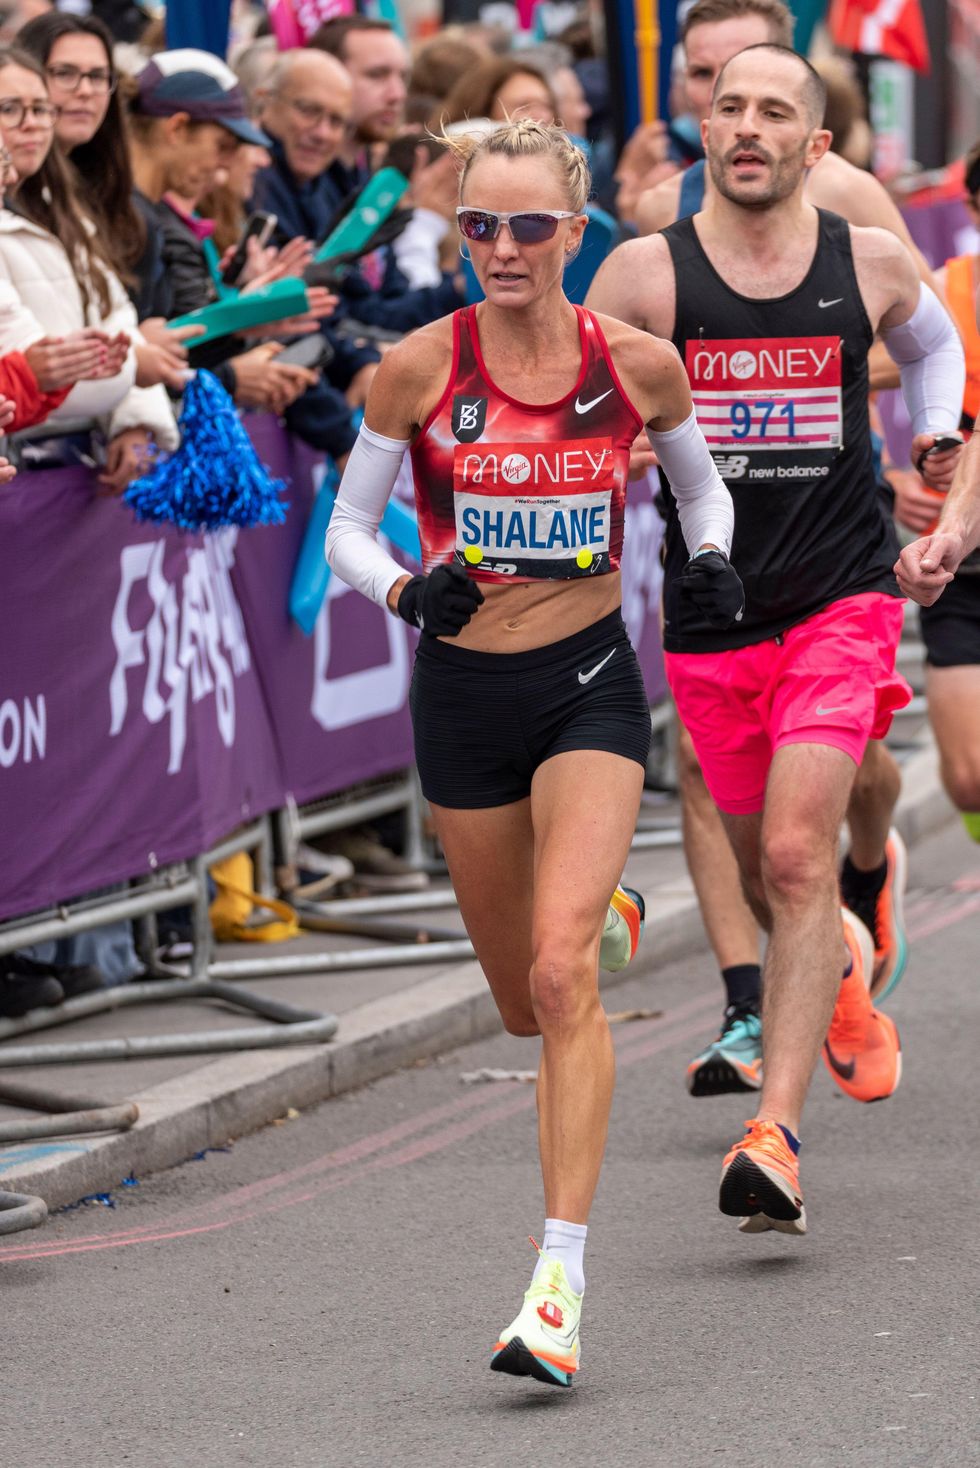 shalane flanagan racing in the virgin money london marathon 2021, in tower hill, london, uk